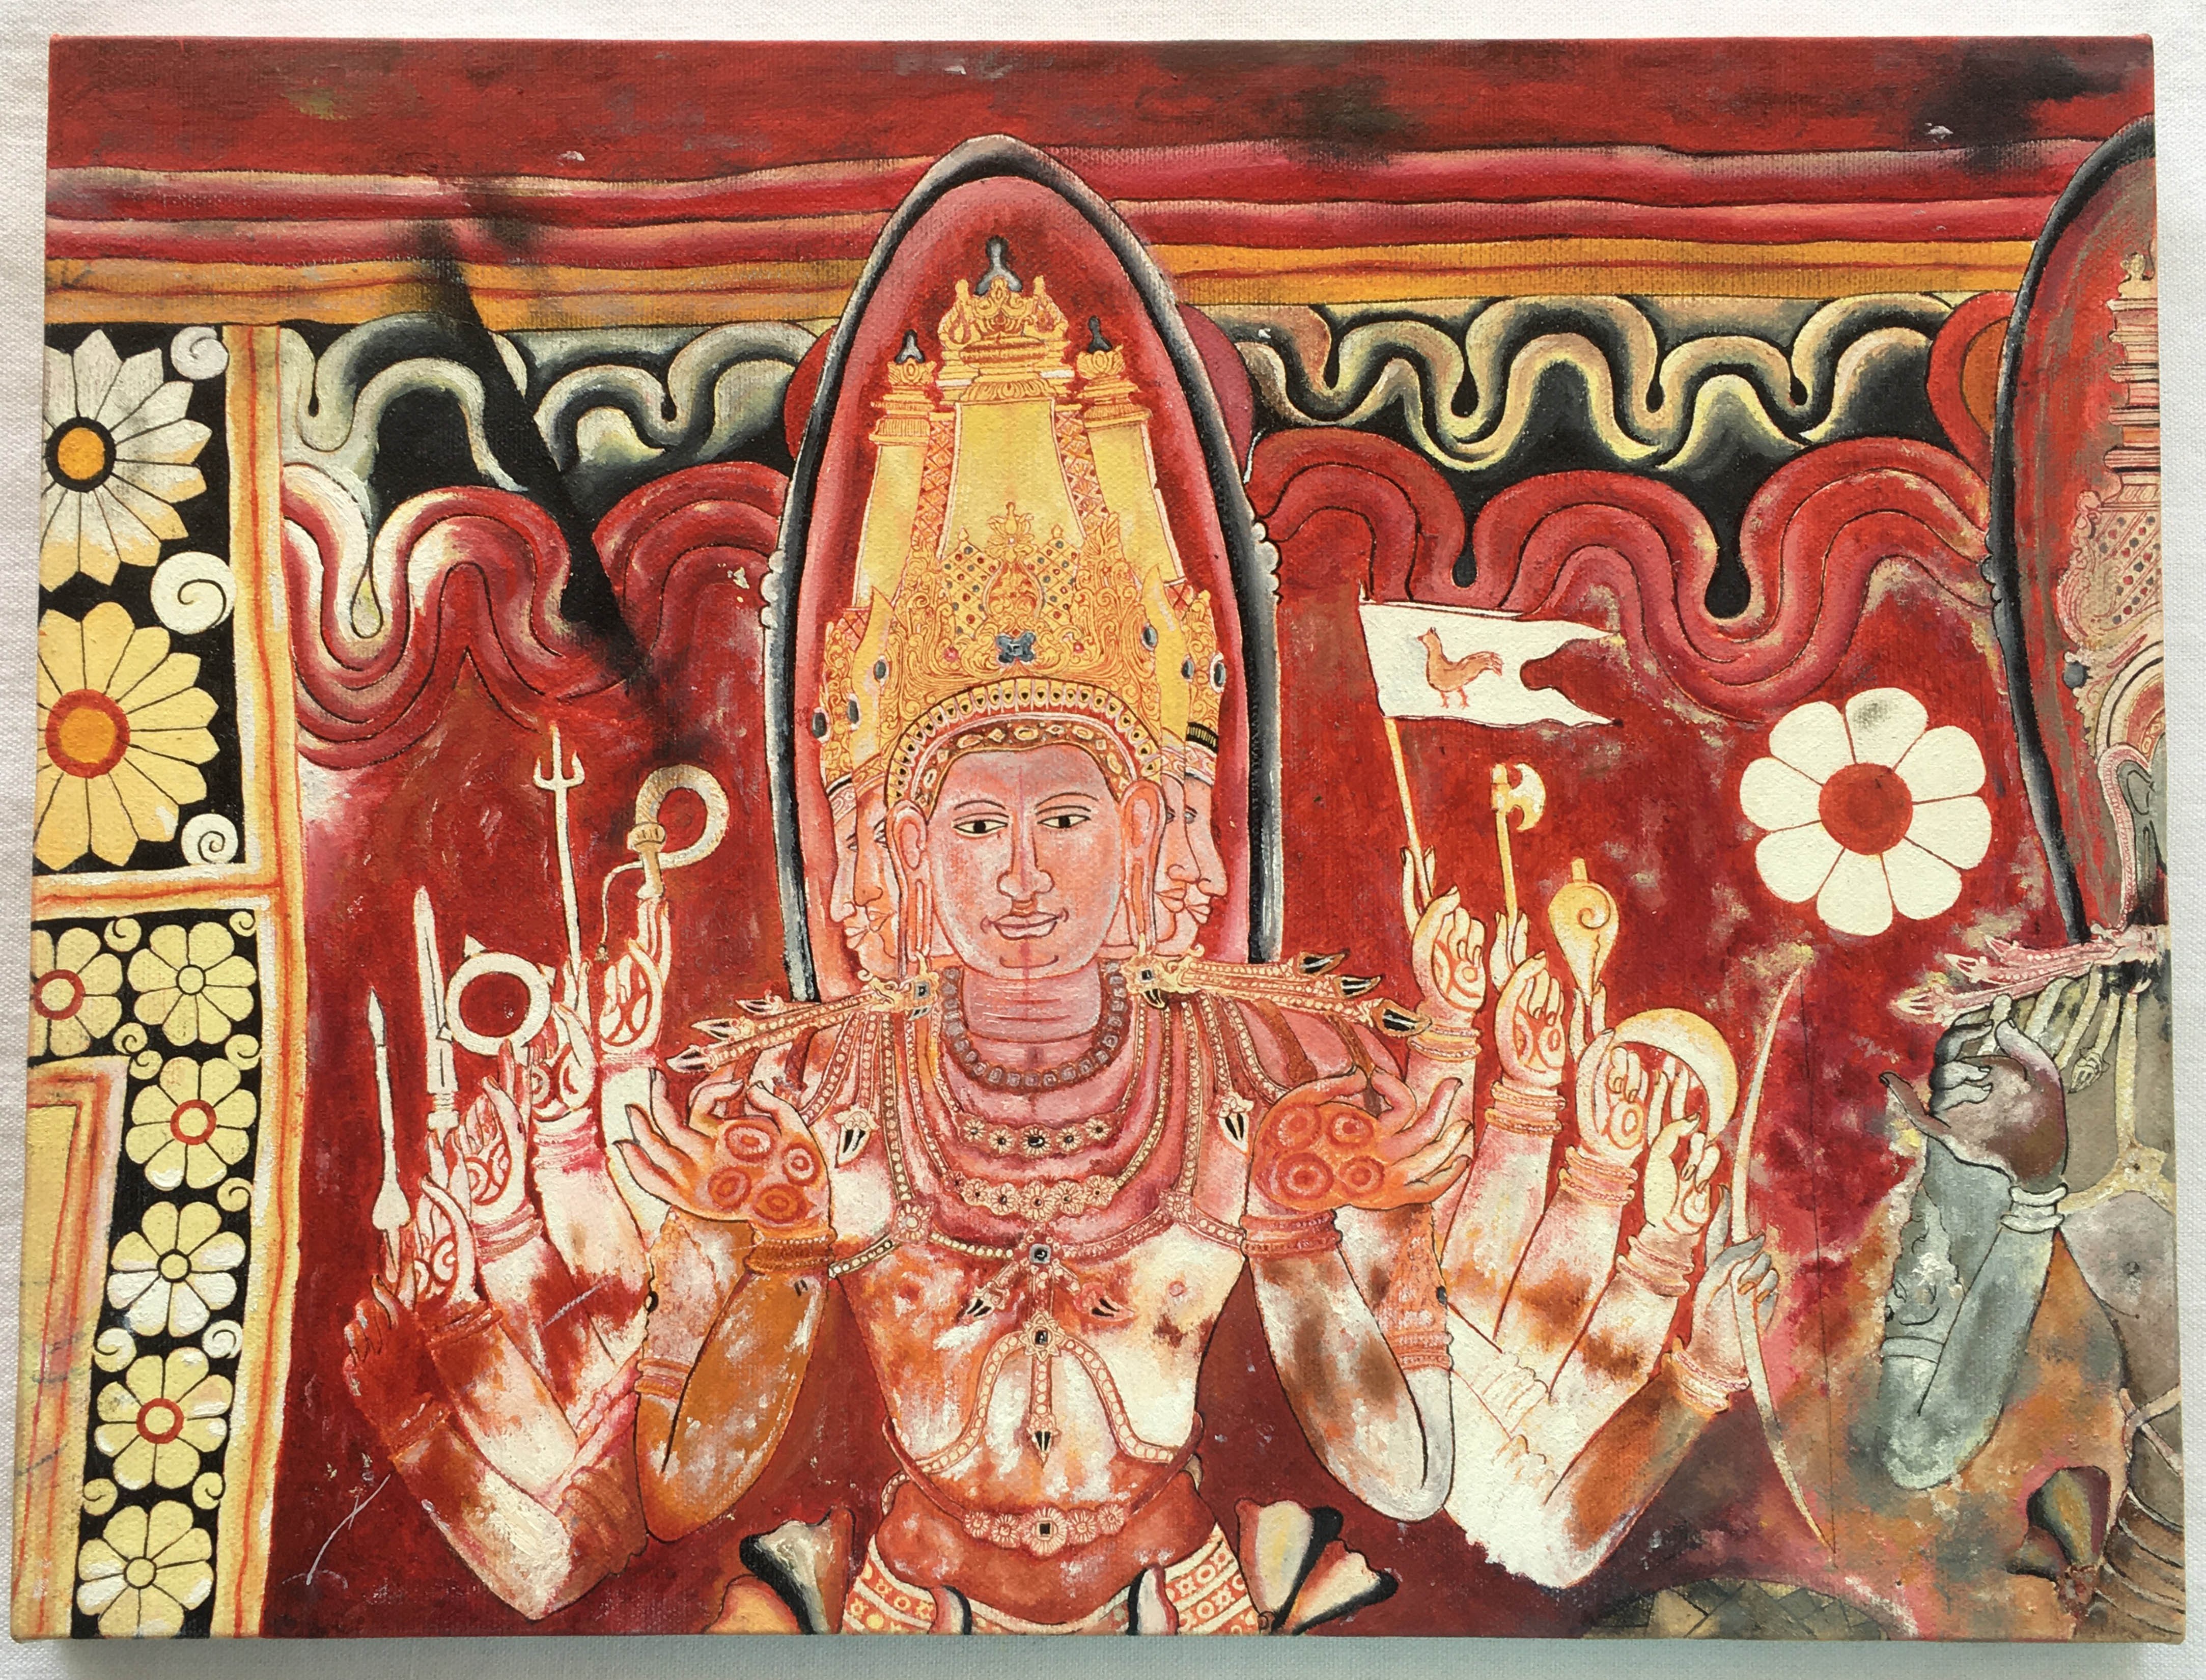 GOD OF KATHARAGAMA by Dilakshi Jayasinghe